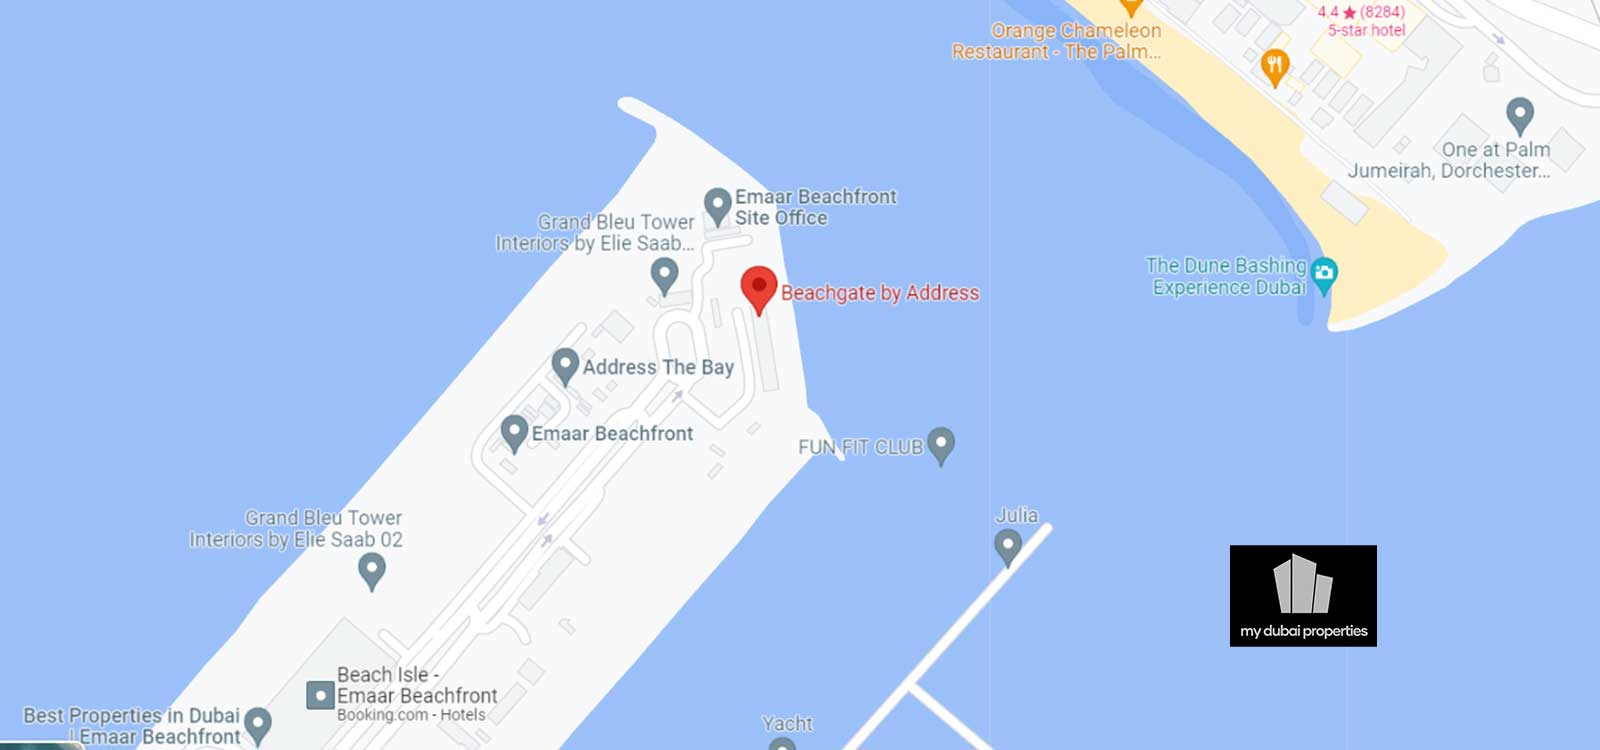 Beachgate by Address at Emaar Beachfront Location Map